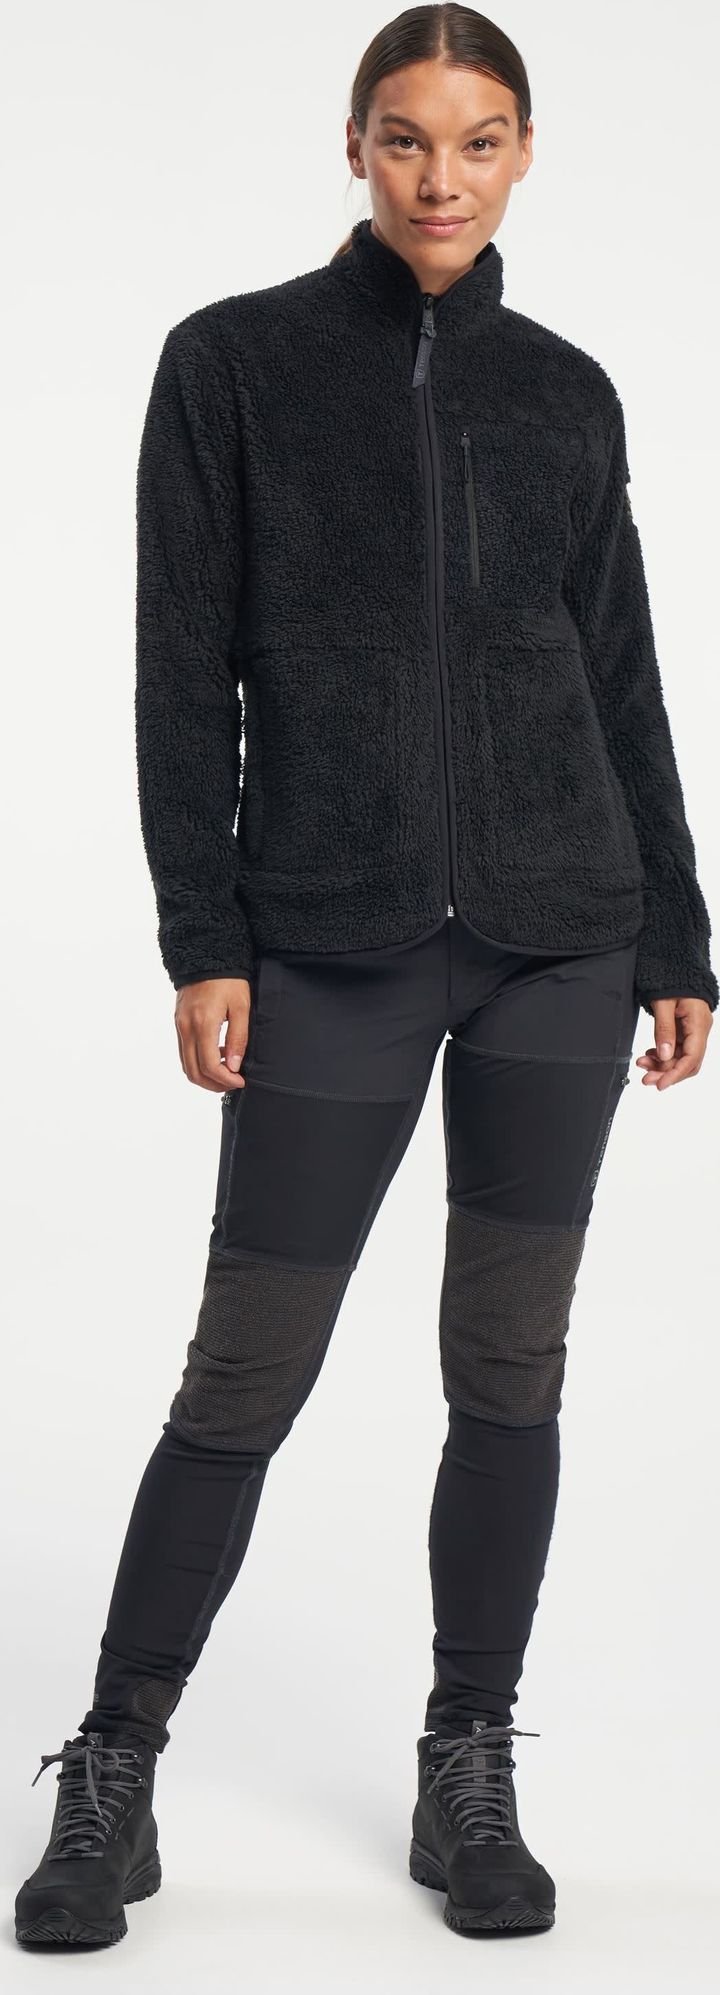 Women's Thermal Pile Zip Jacket Black Tenson